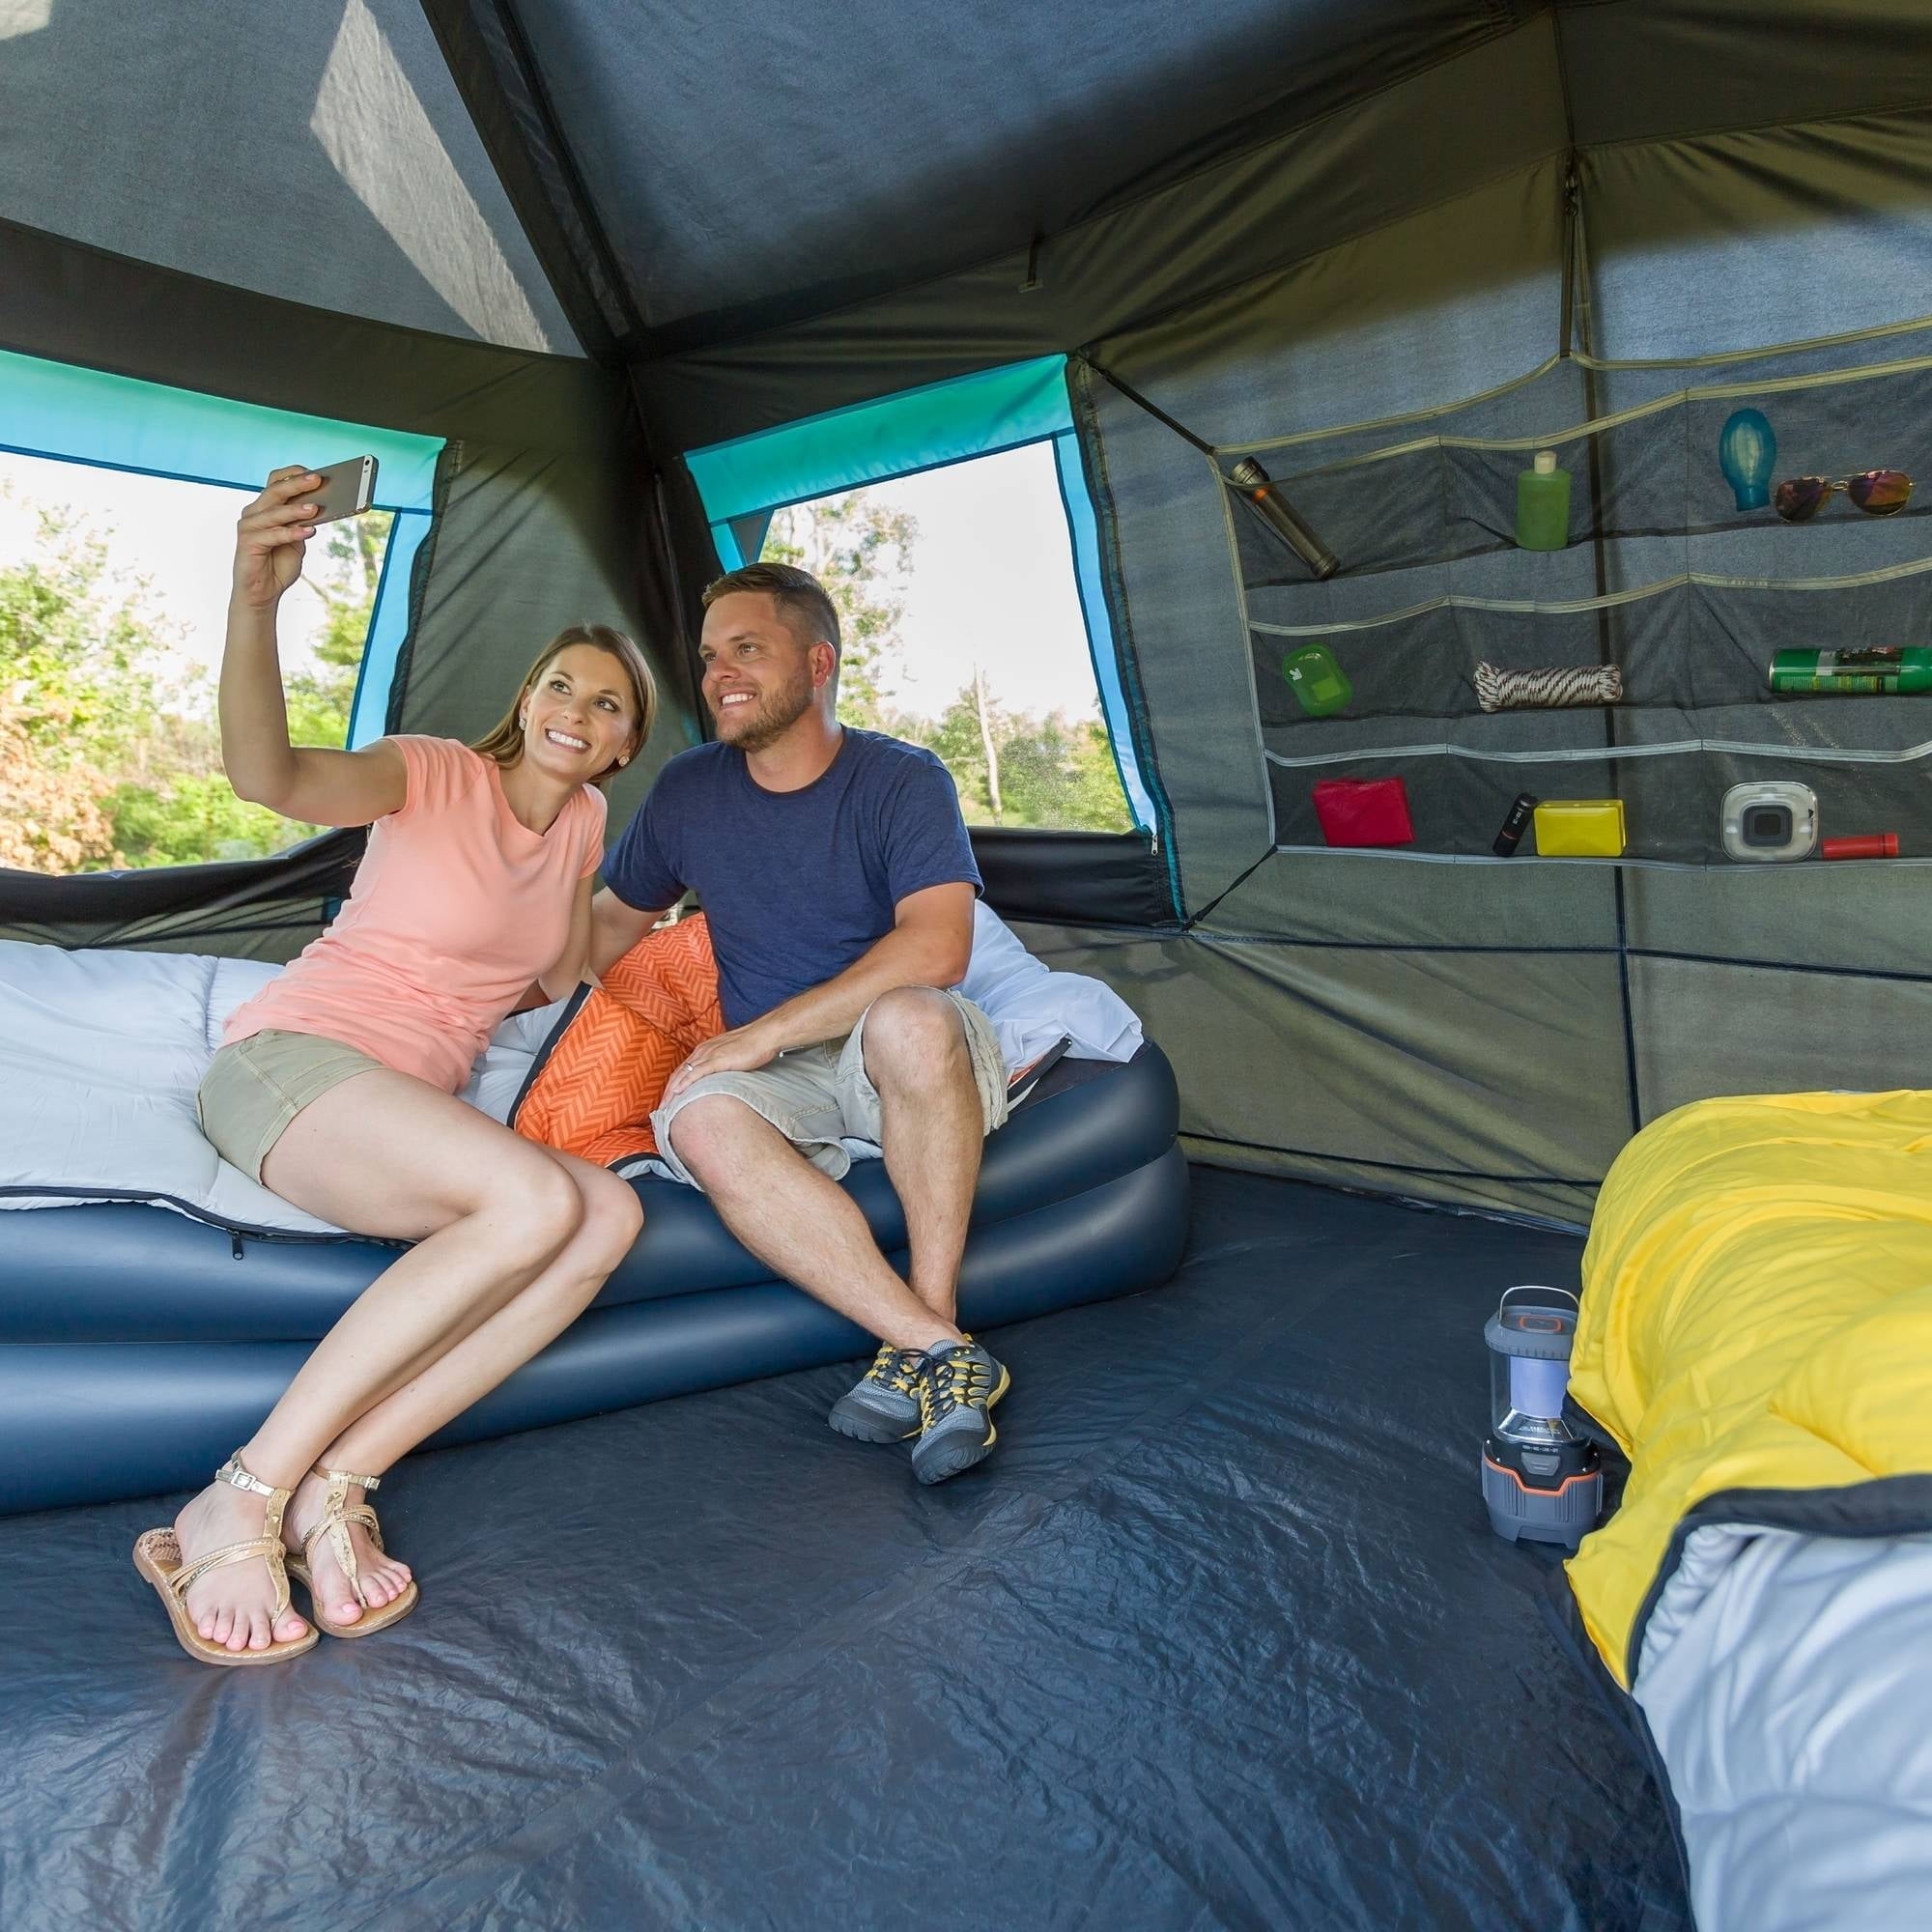 Ozark Trail 14'x10' 10-Person Dark Rest Instant Cabin Tent, 37.7 lbs